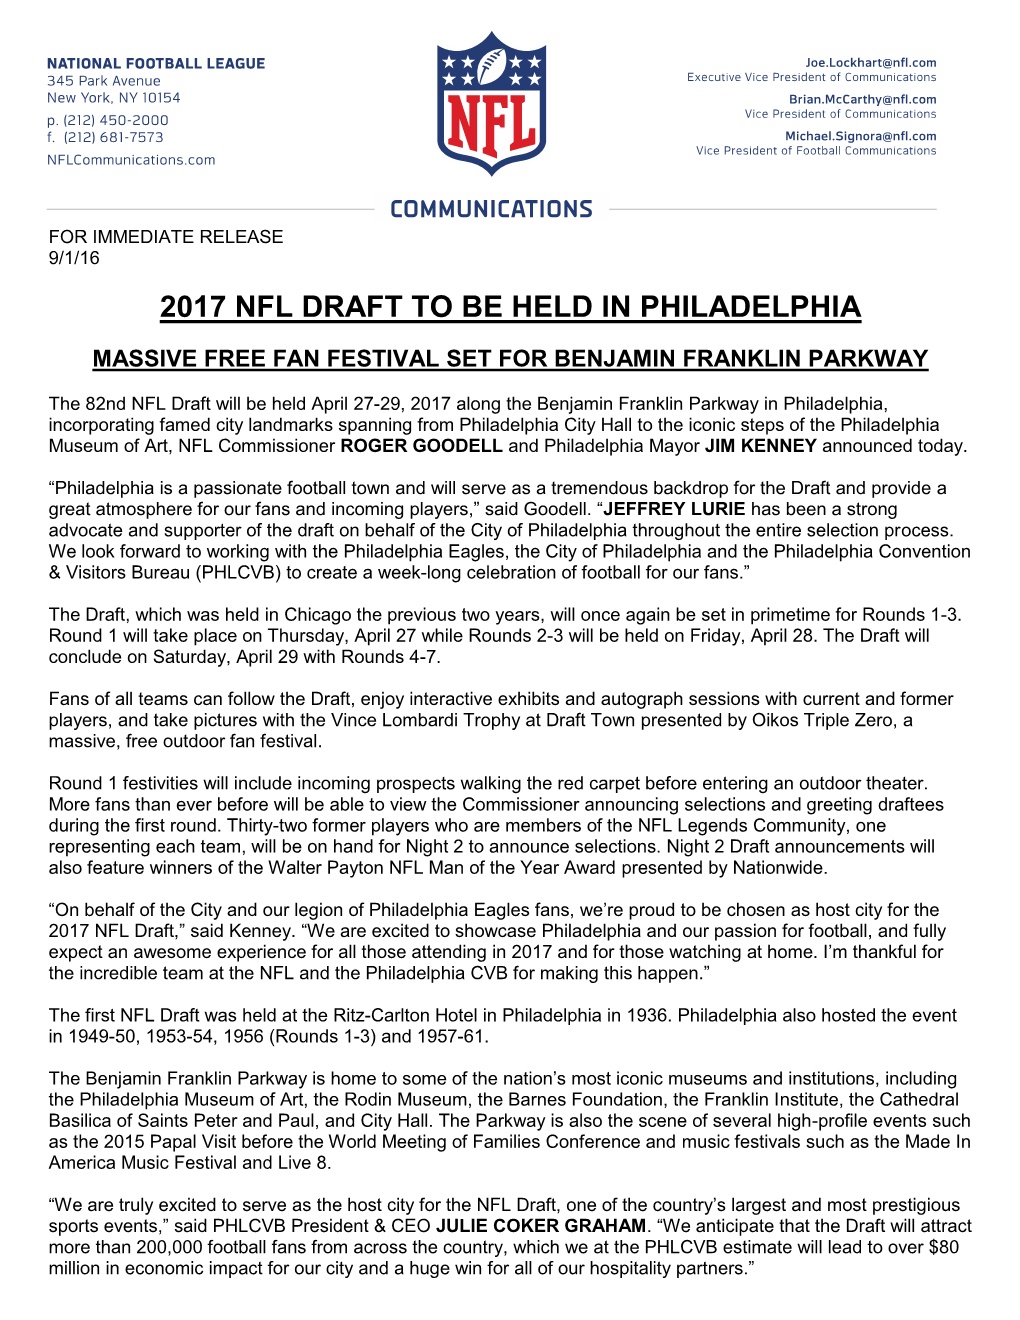 2017 Nfl Draft to Be Held in Philadelphia